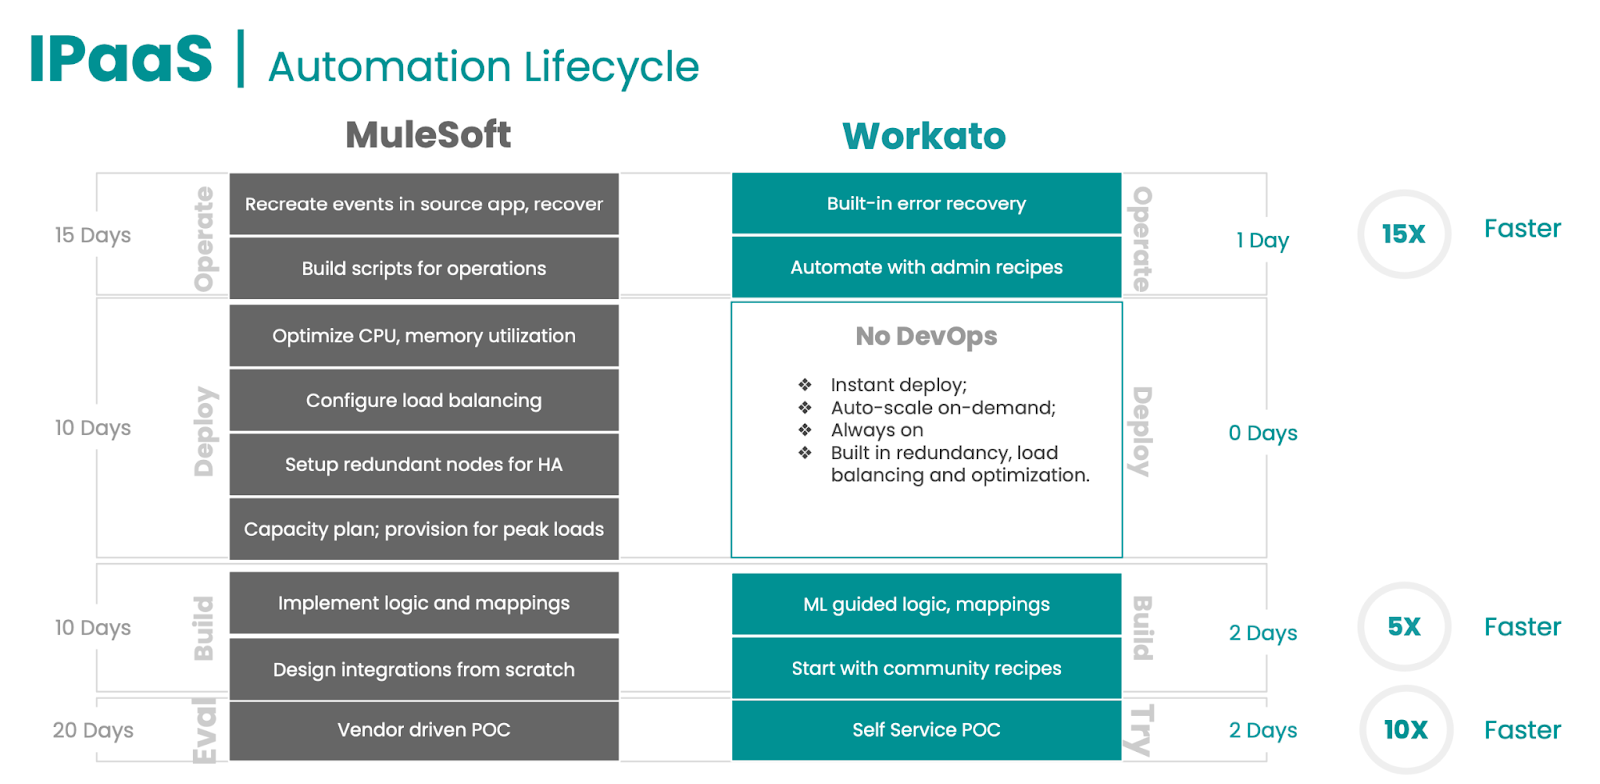 IpaaS- Workato vs Mulesoft automation lifecycle